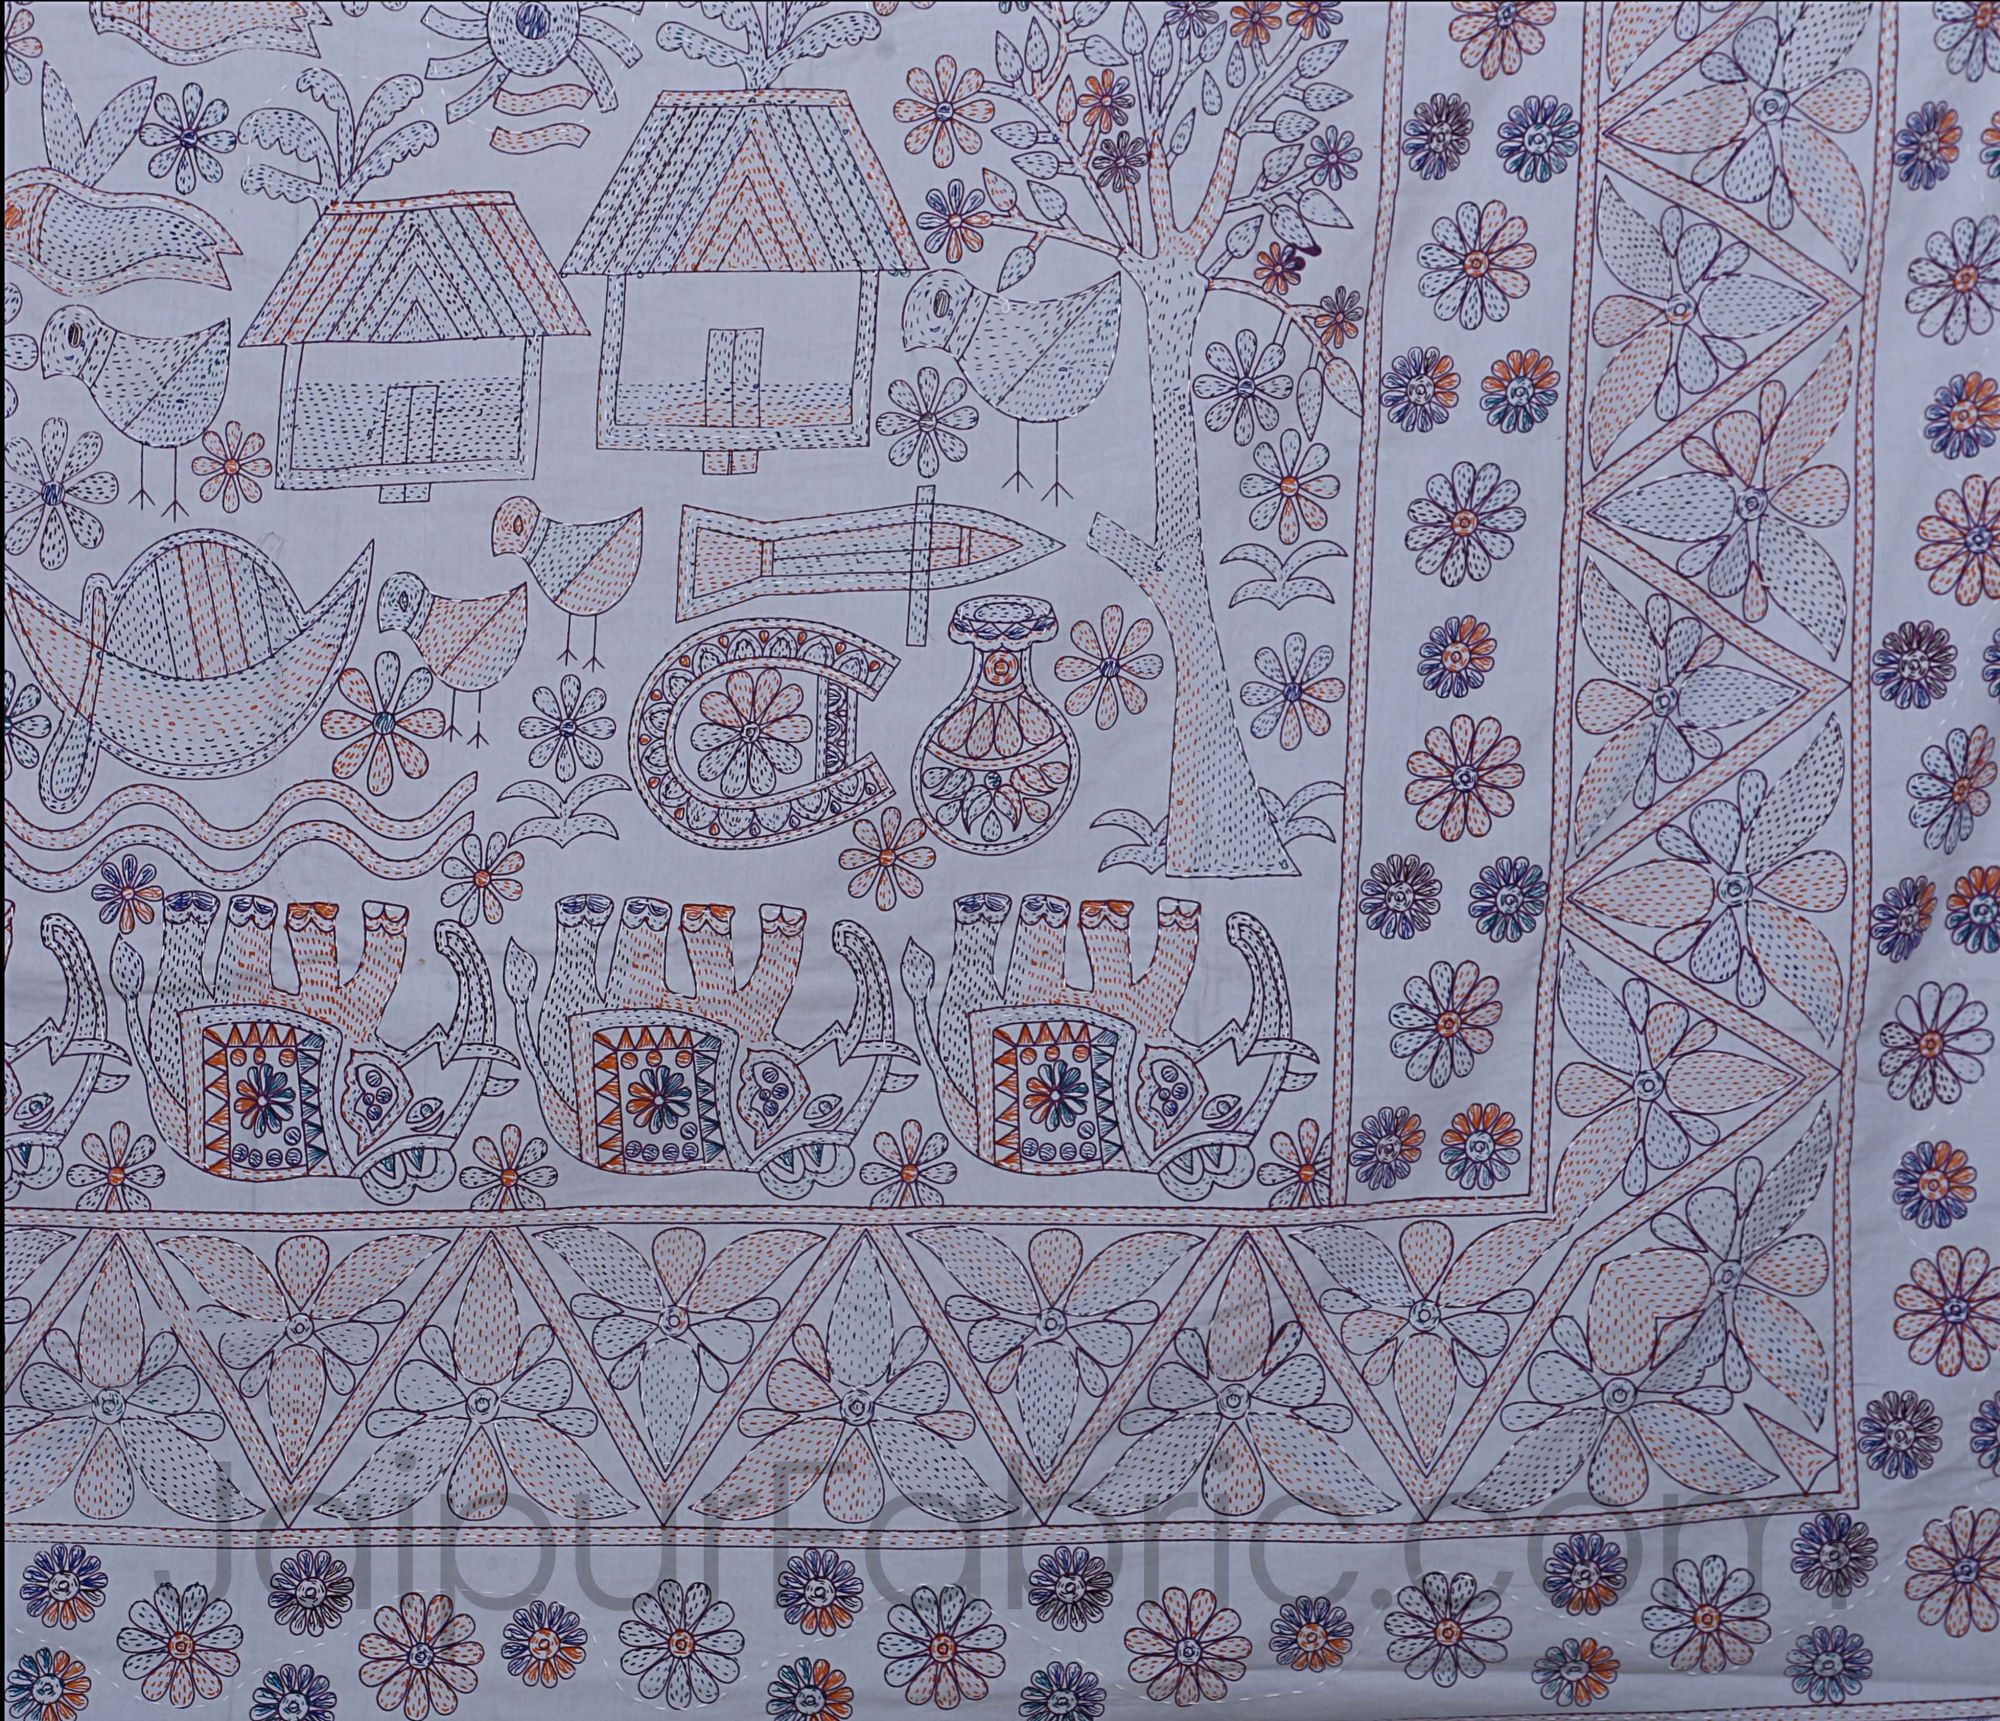 Beautiful Blue Kantha Thread Work Embroidery Double Bedsheet / Dohar / Light Blanket / Thin Comforter